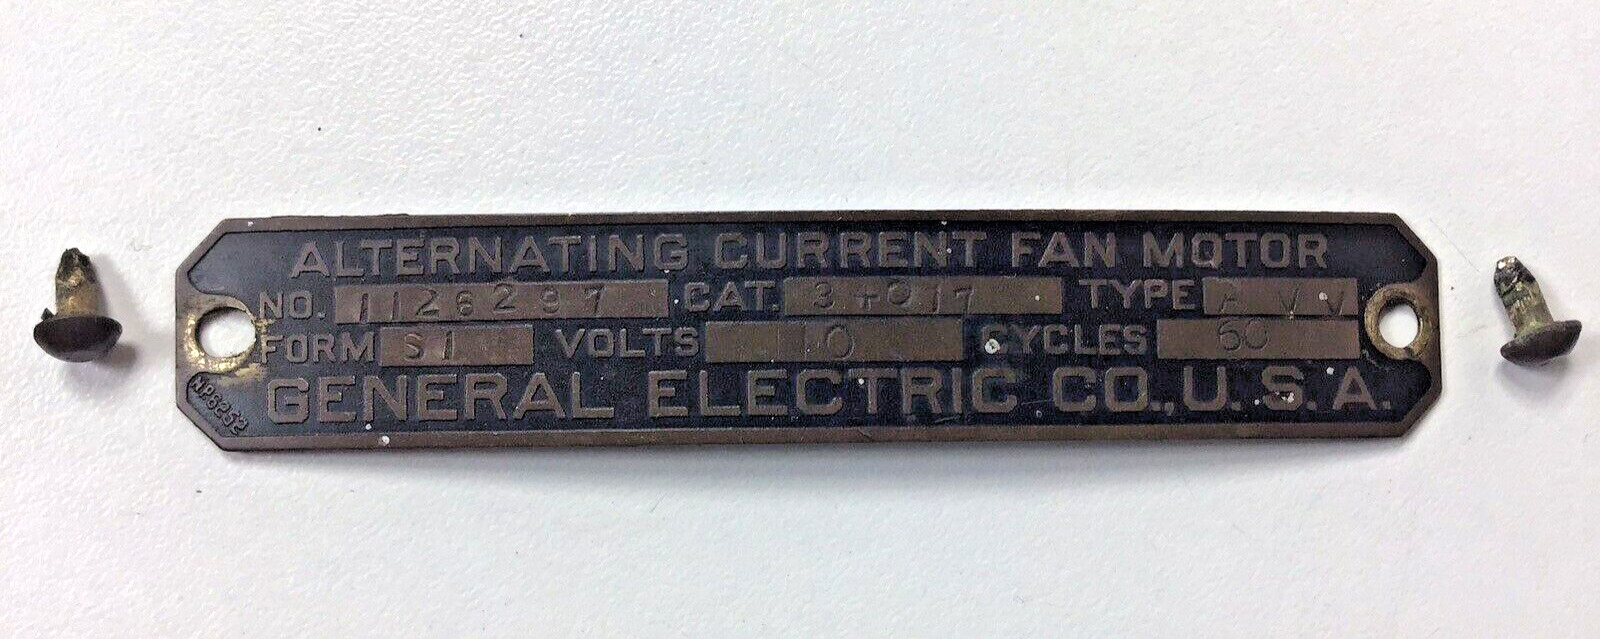 Vintage Antique Original General Electric GE Fan Motor ID Tag Cat 34017 Form S1